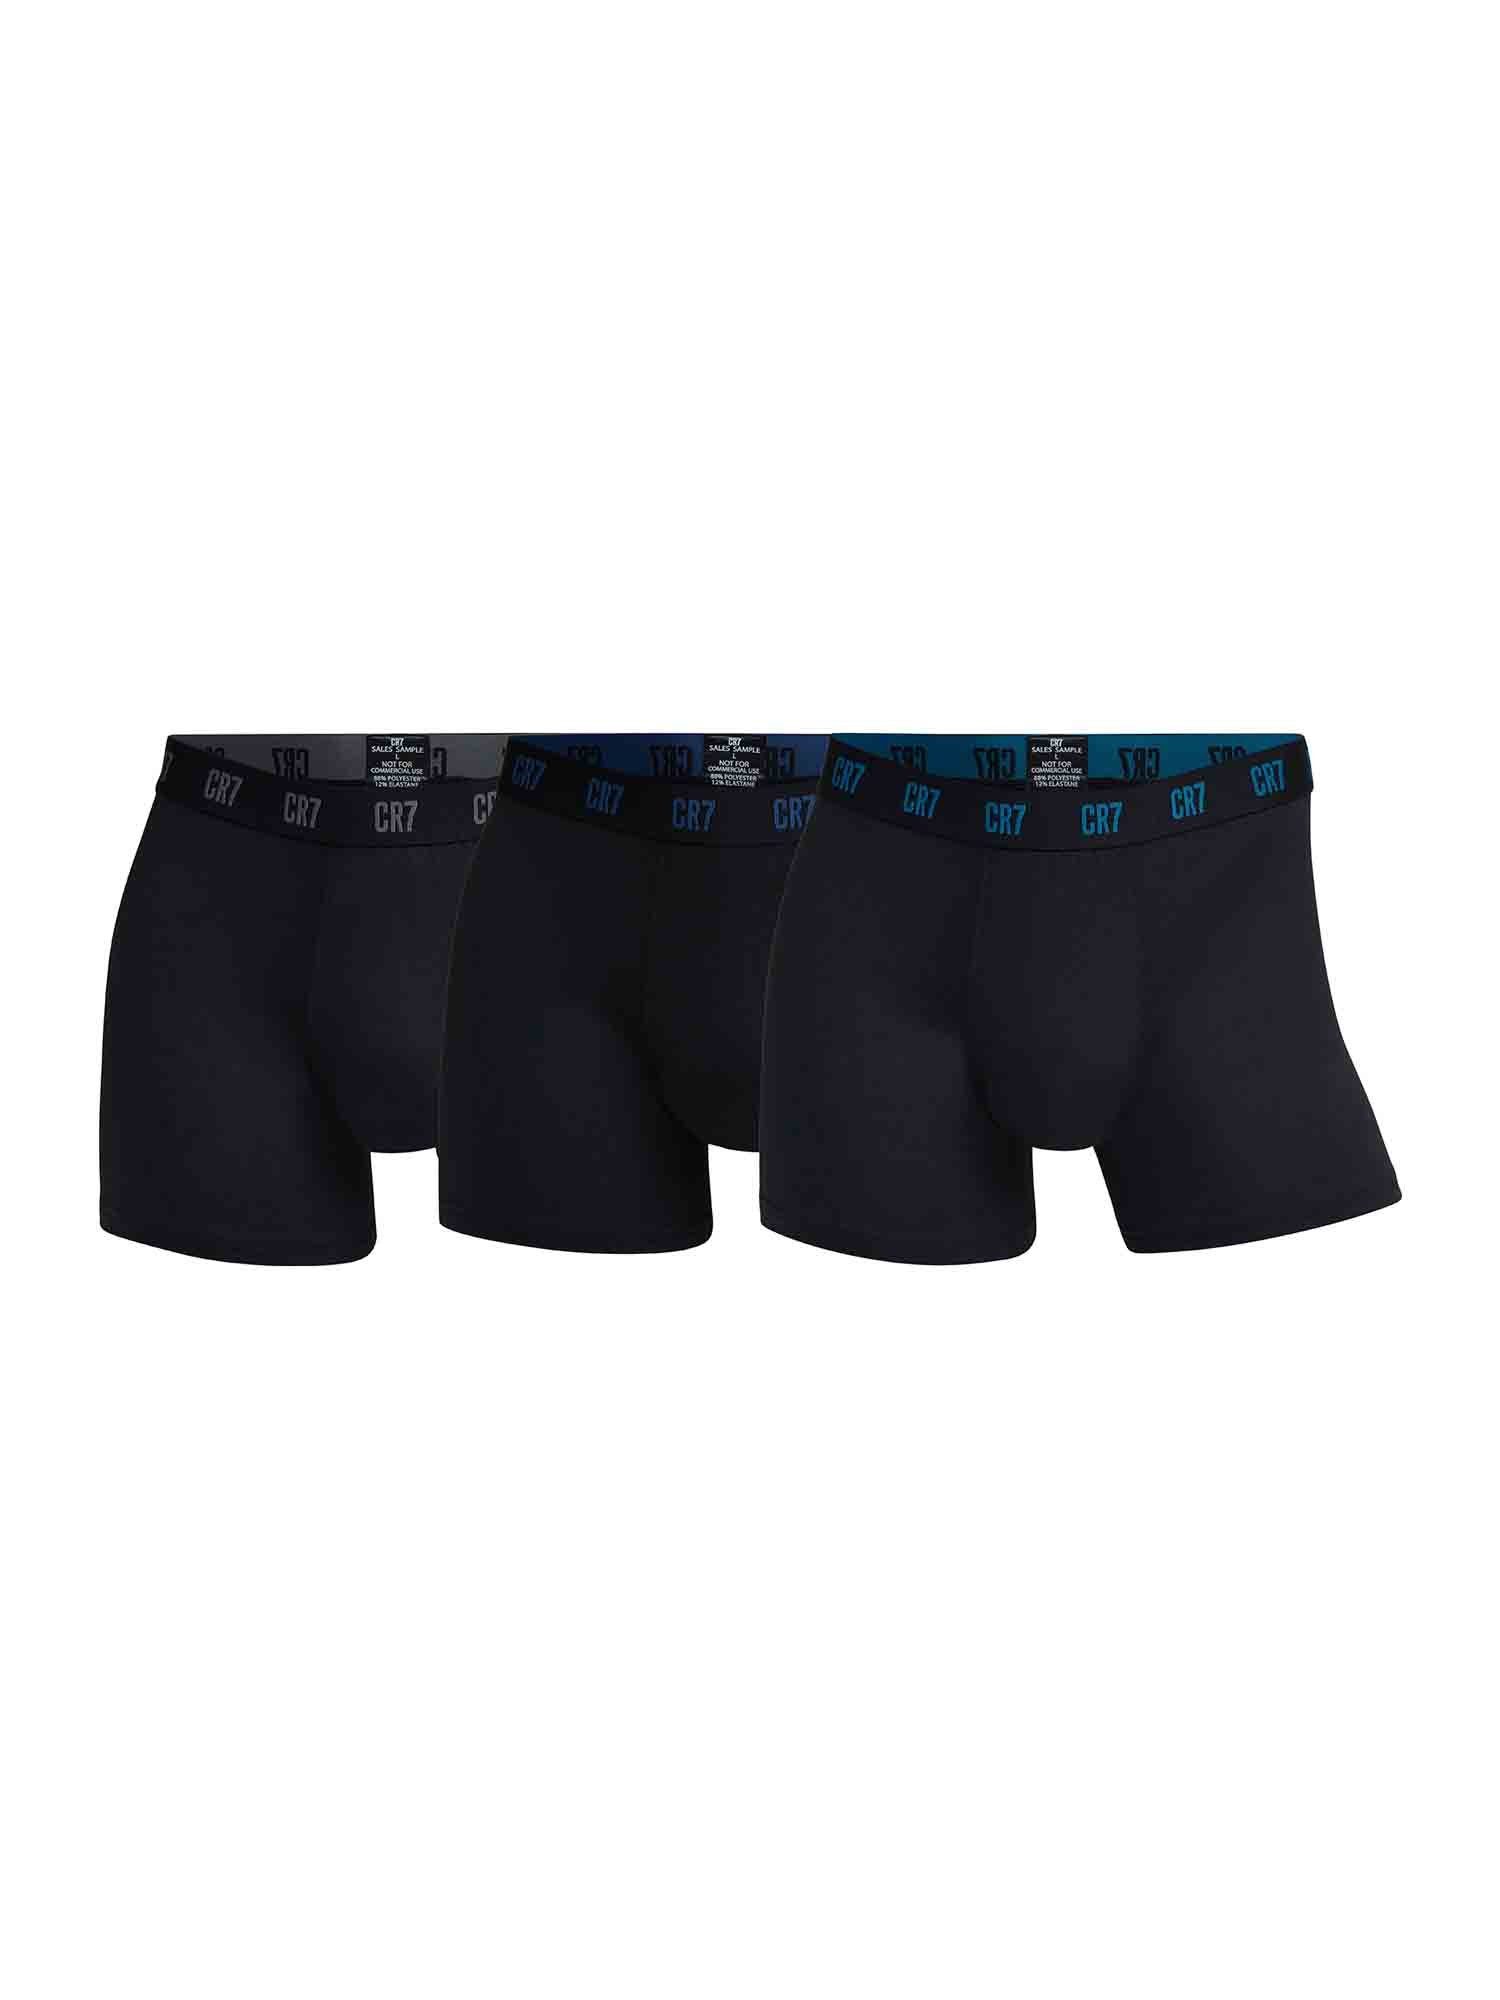 Retro CR7 Herren 18 (3-St) Boxershorts Retro Männer Multipack Pants Pants Trunks Multi